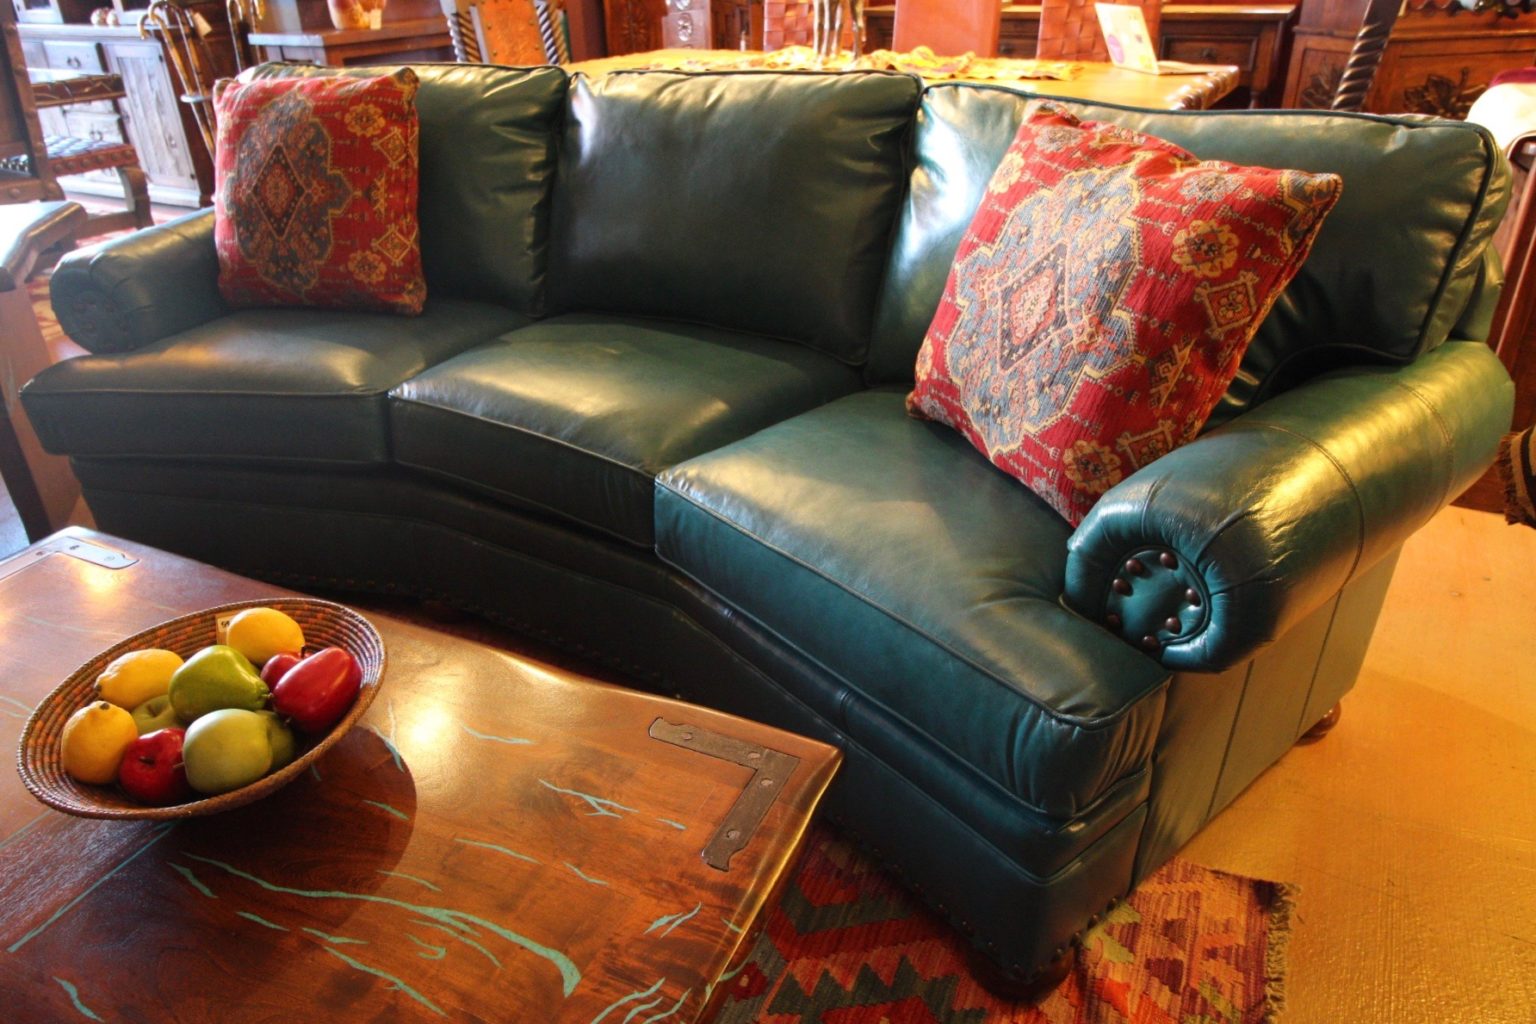 Monte Cristo Caribe Leather Conversational Sofa